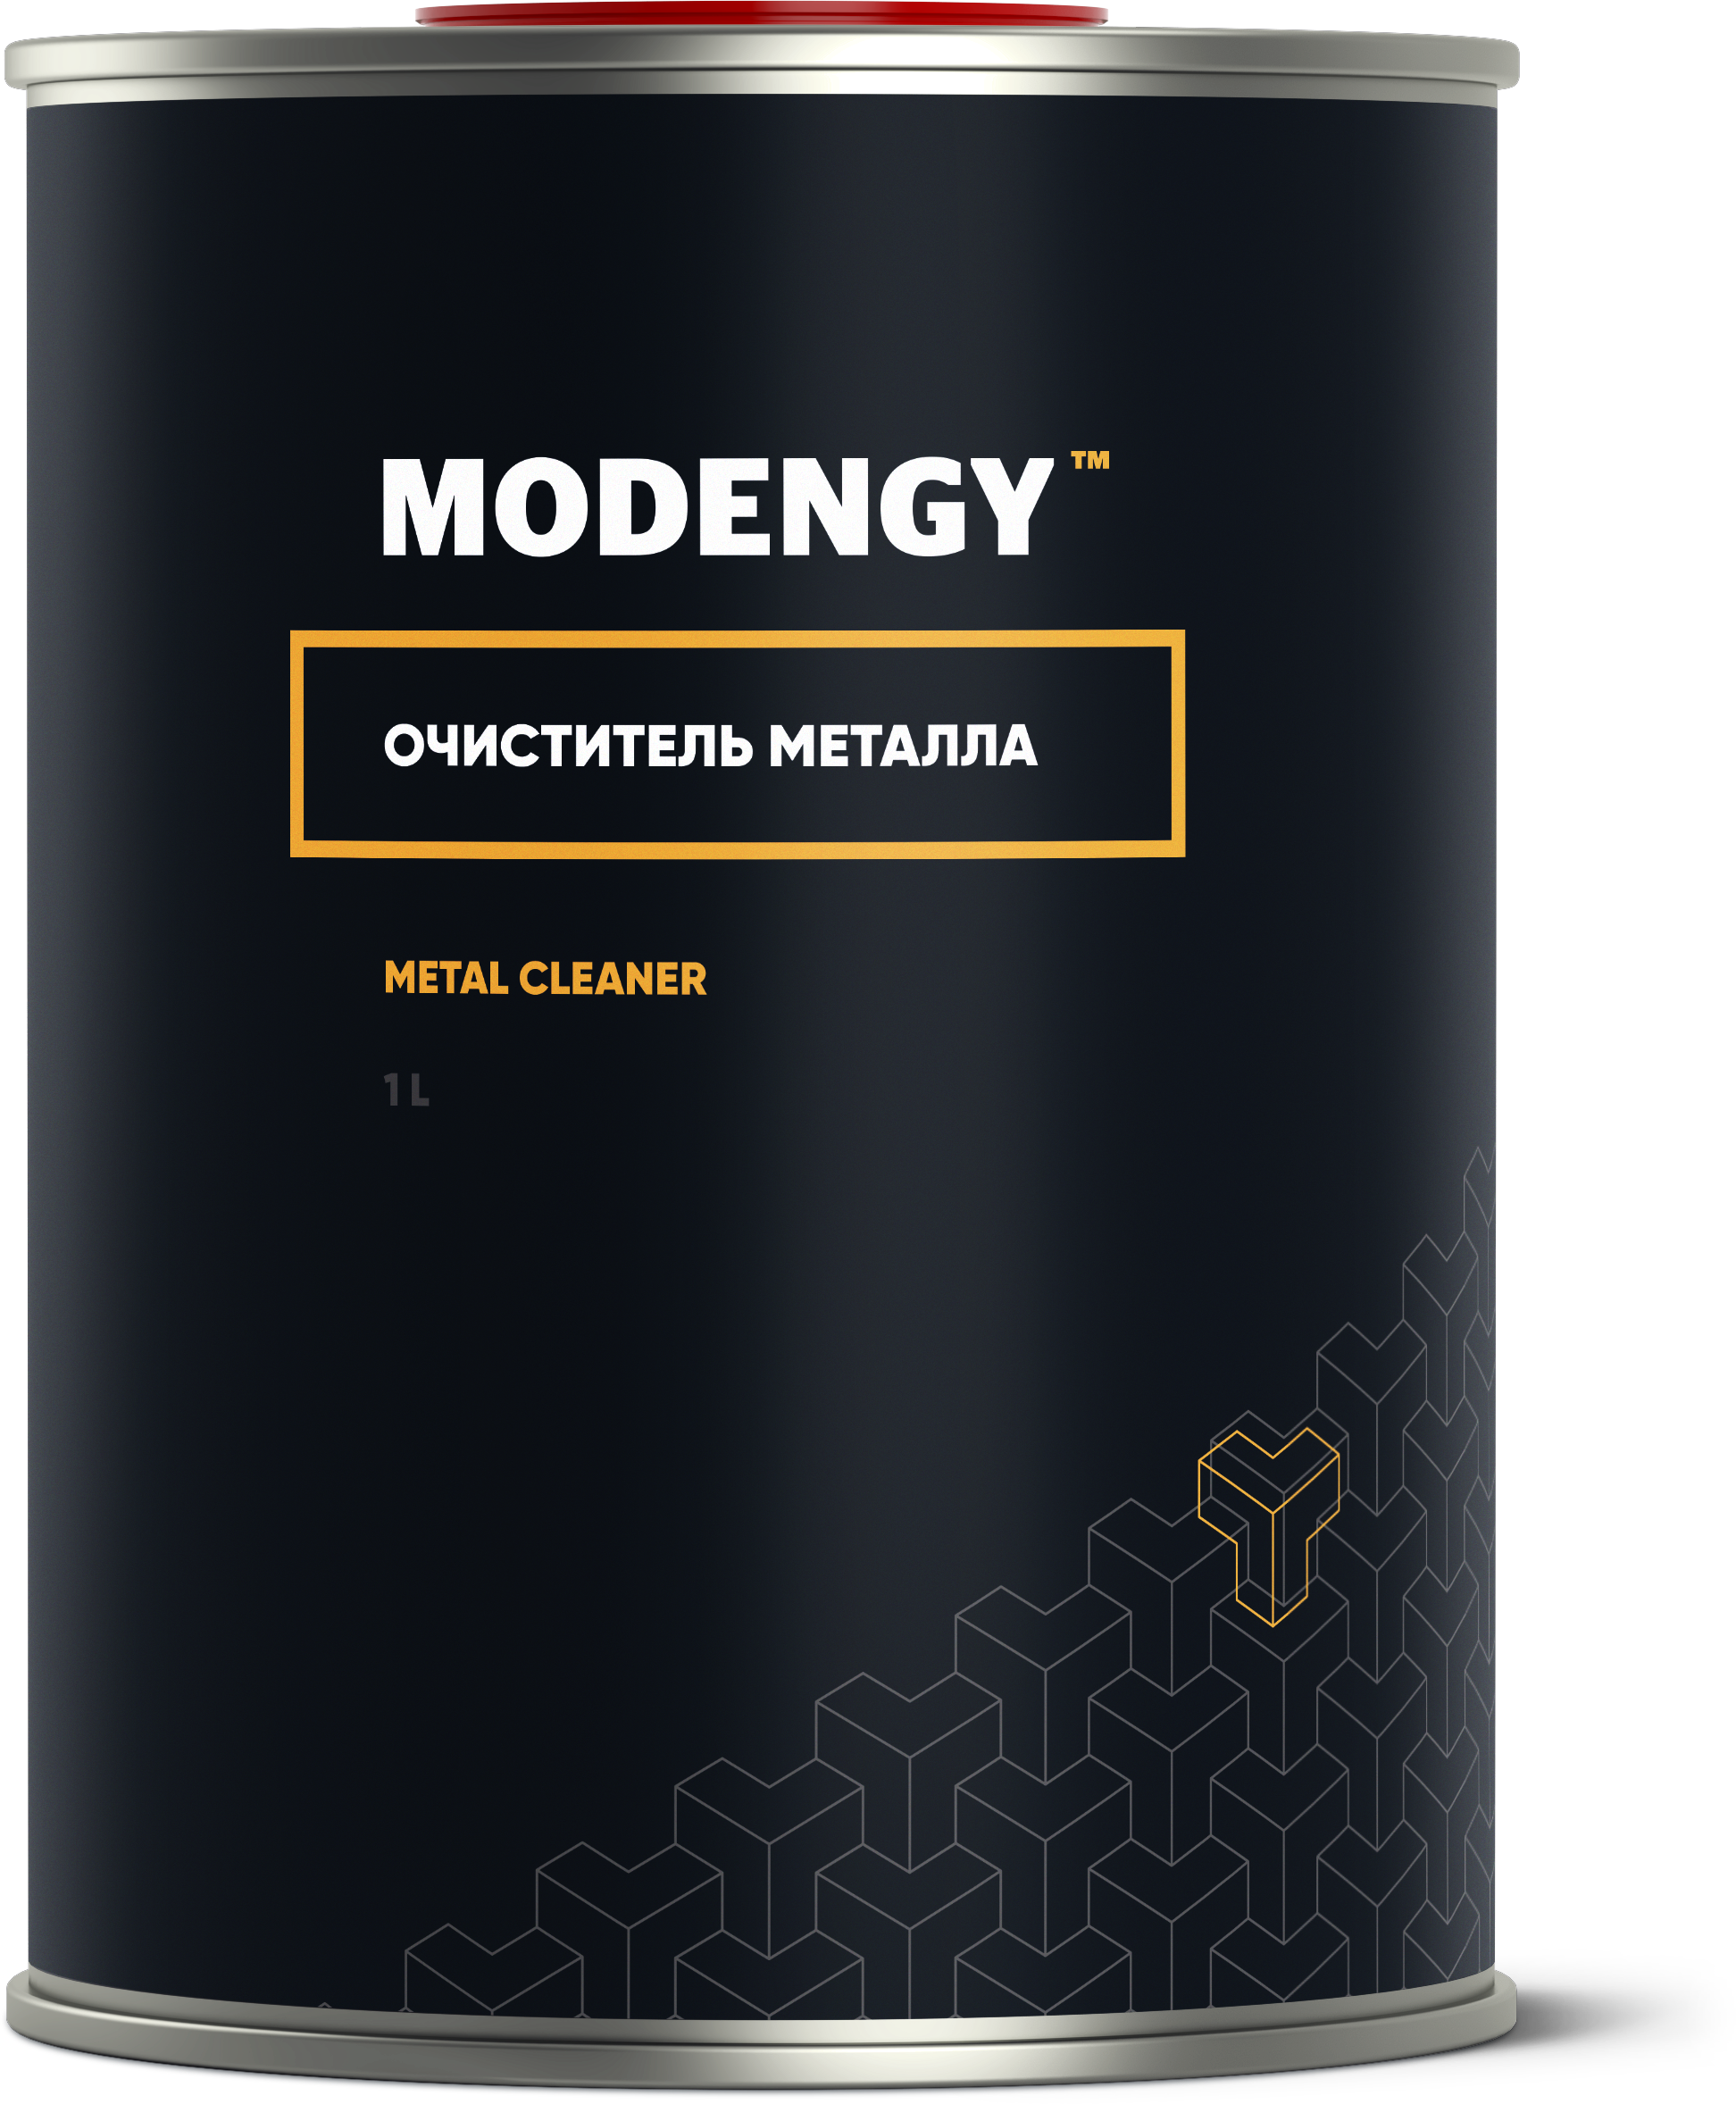 MODENGY Очиститель металла (1 л)